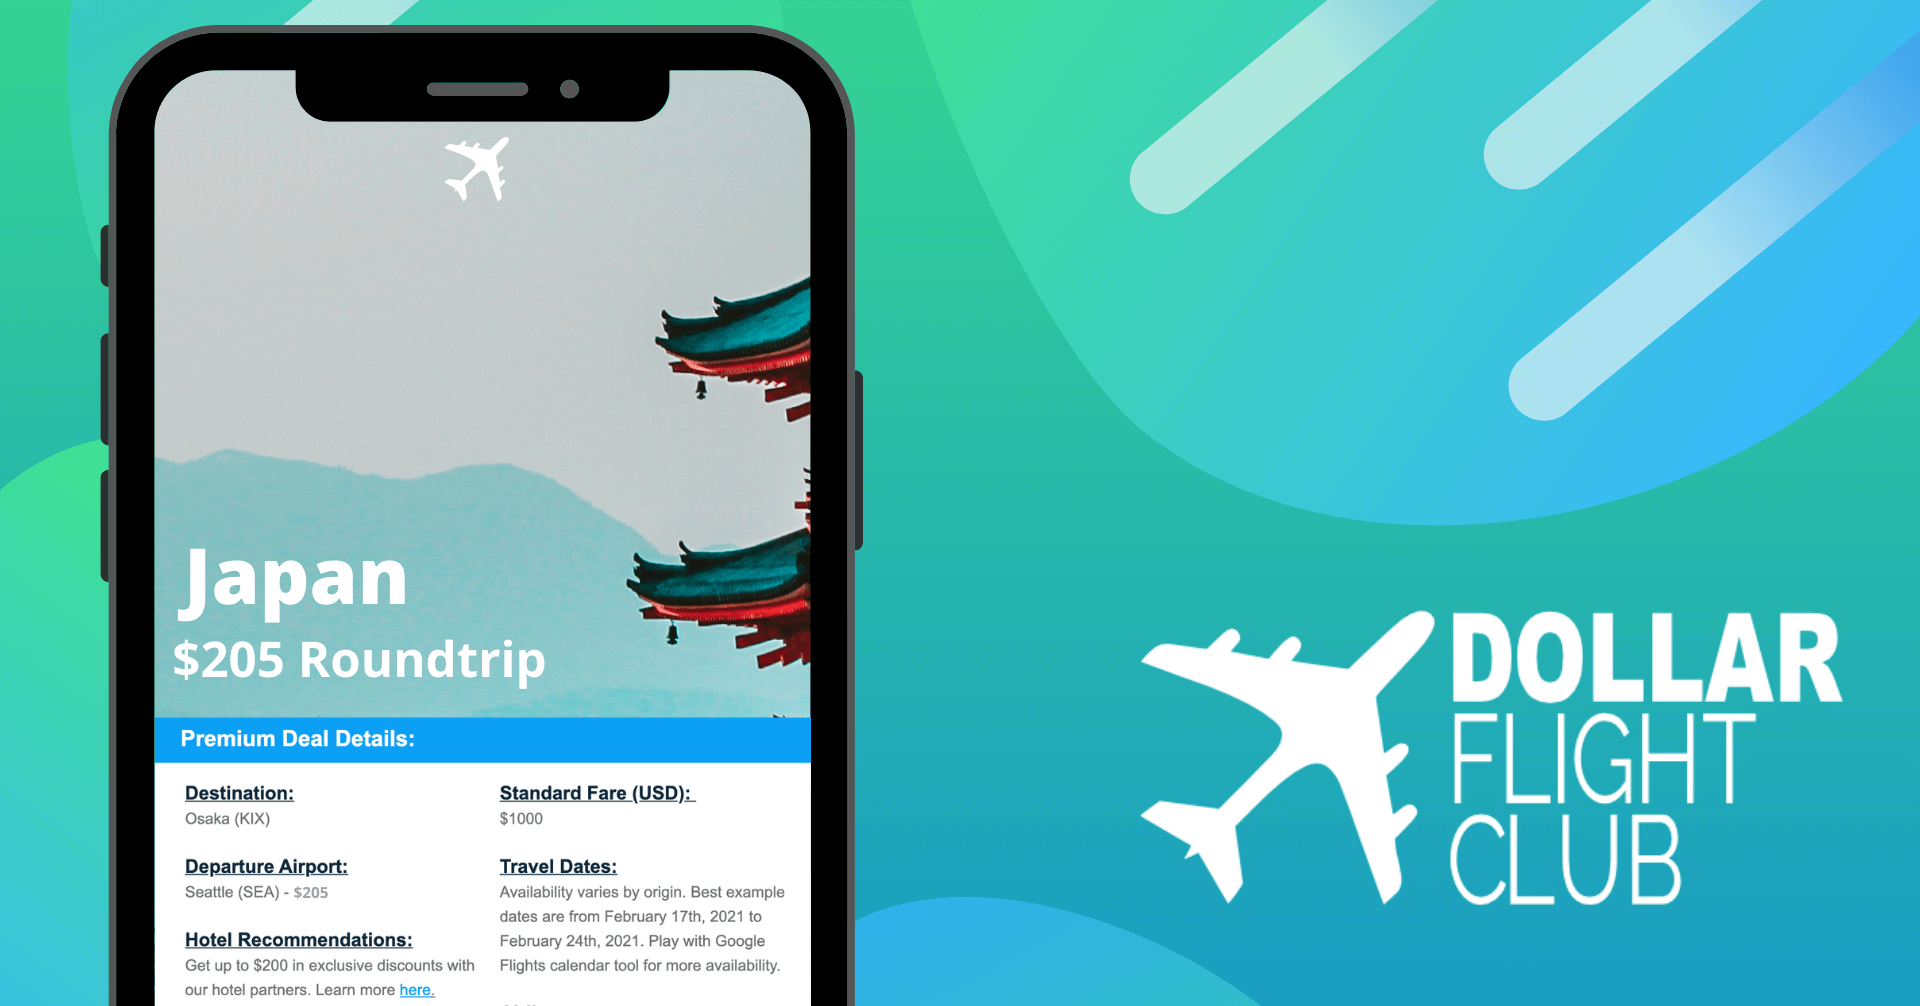 Is the hopper app legit for flights information